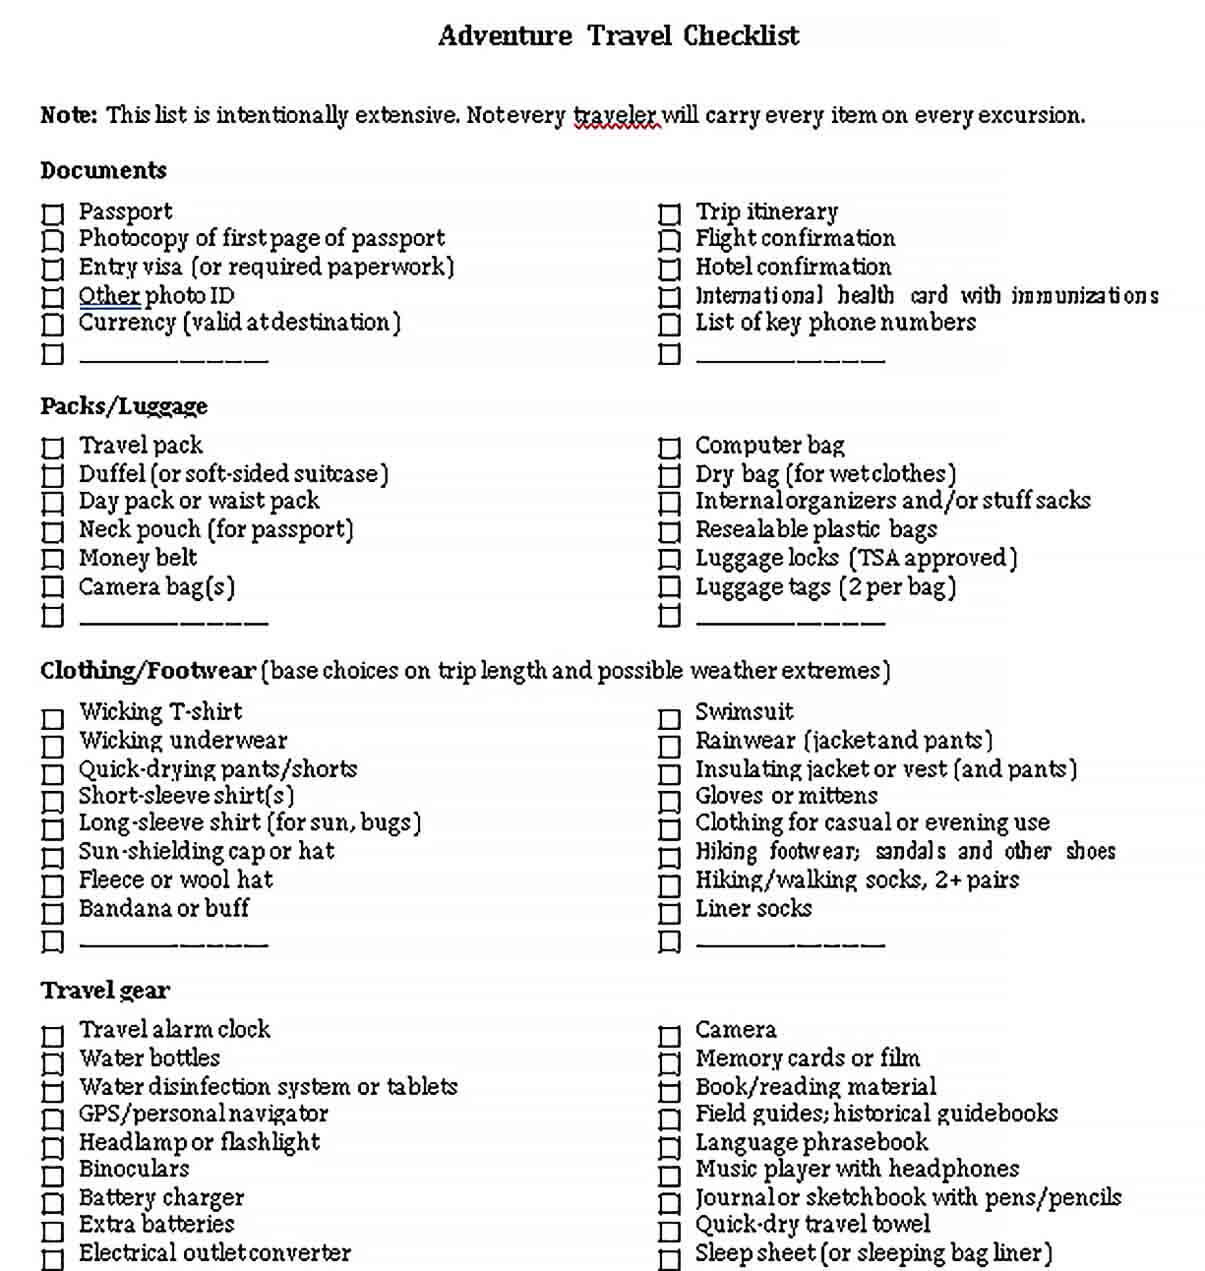 Sample Adventure Travel Checklist